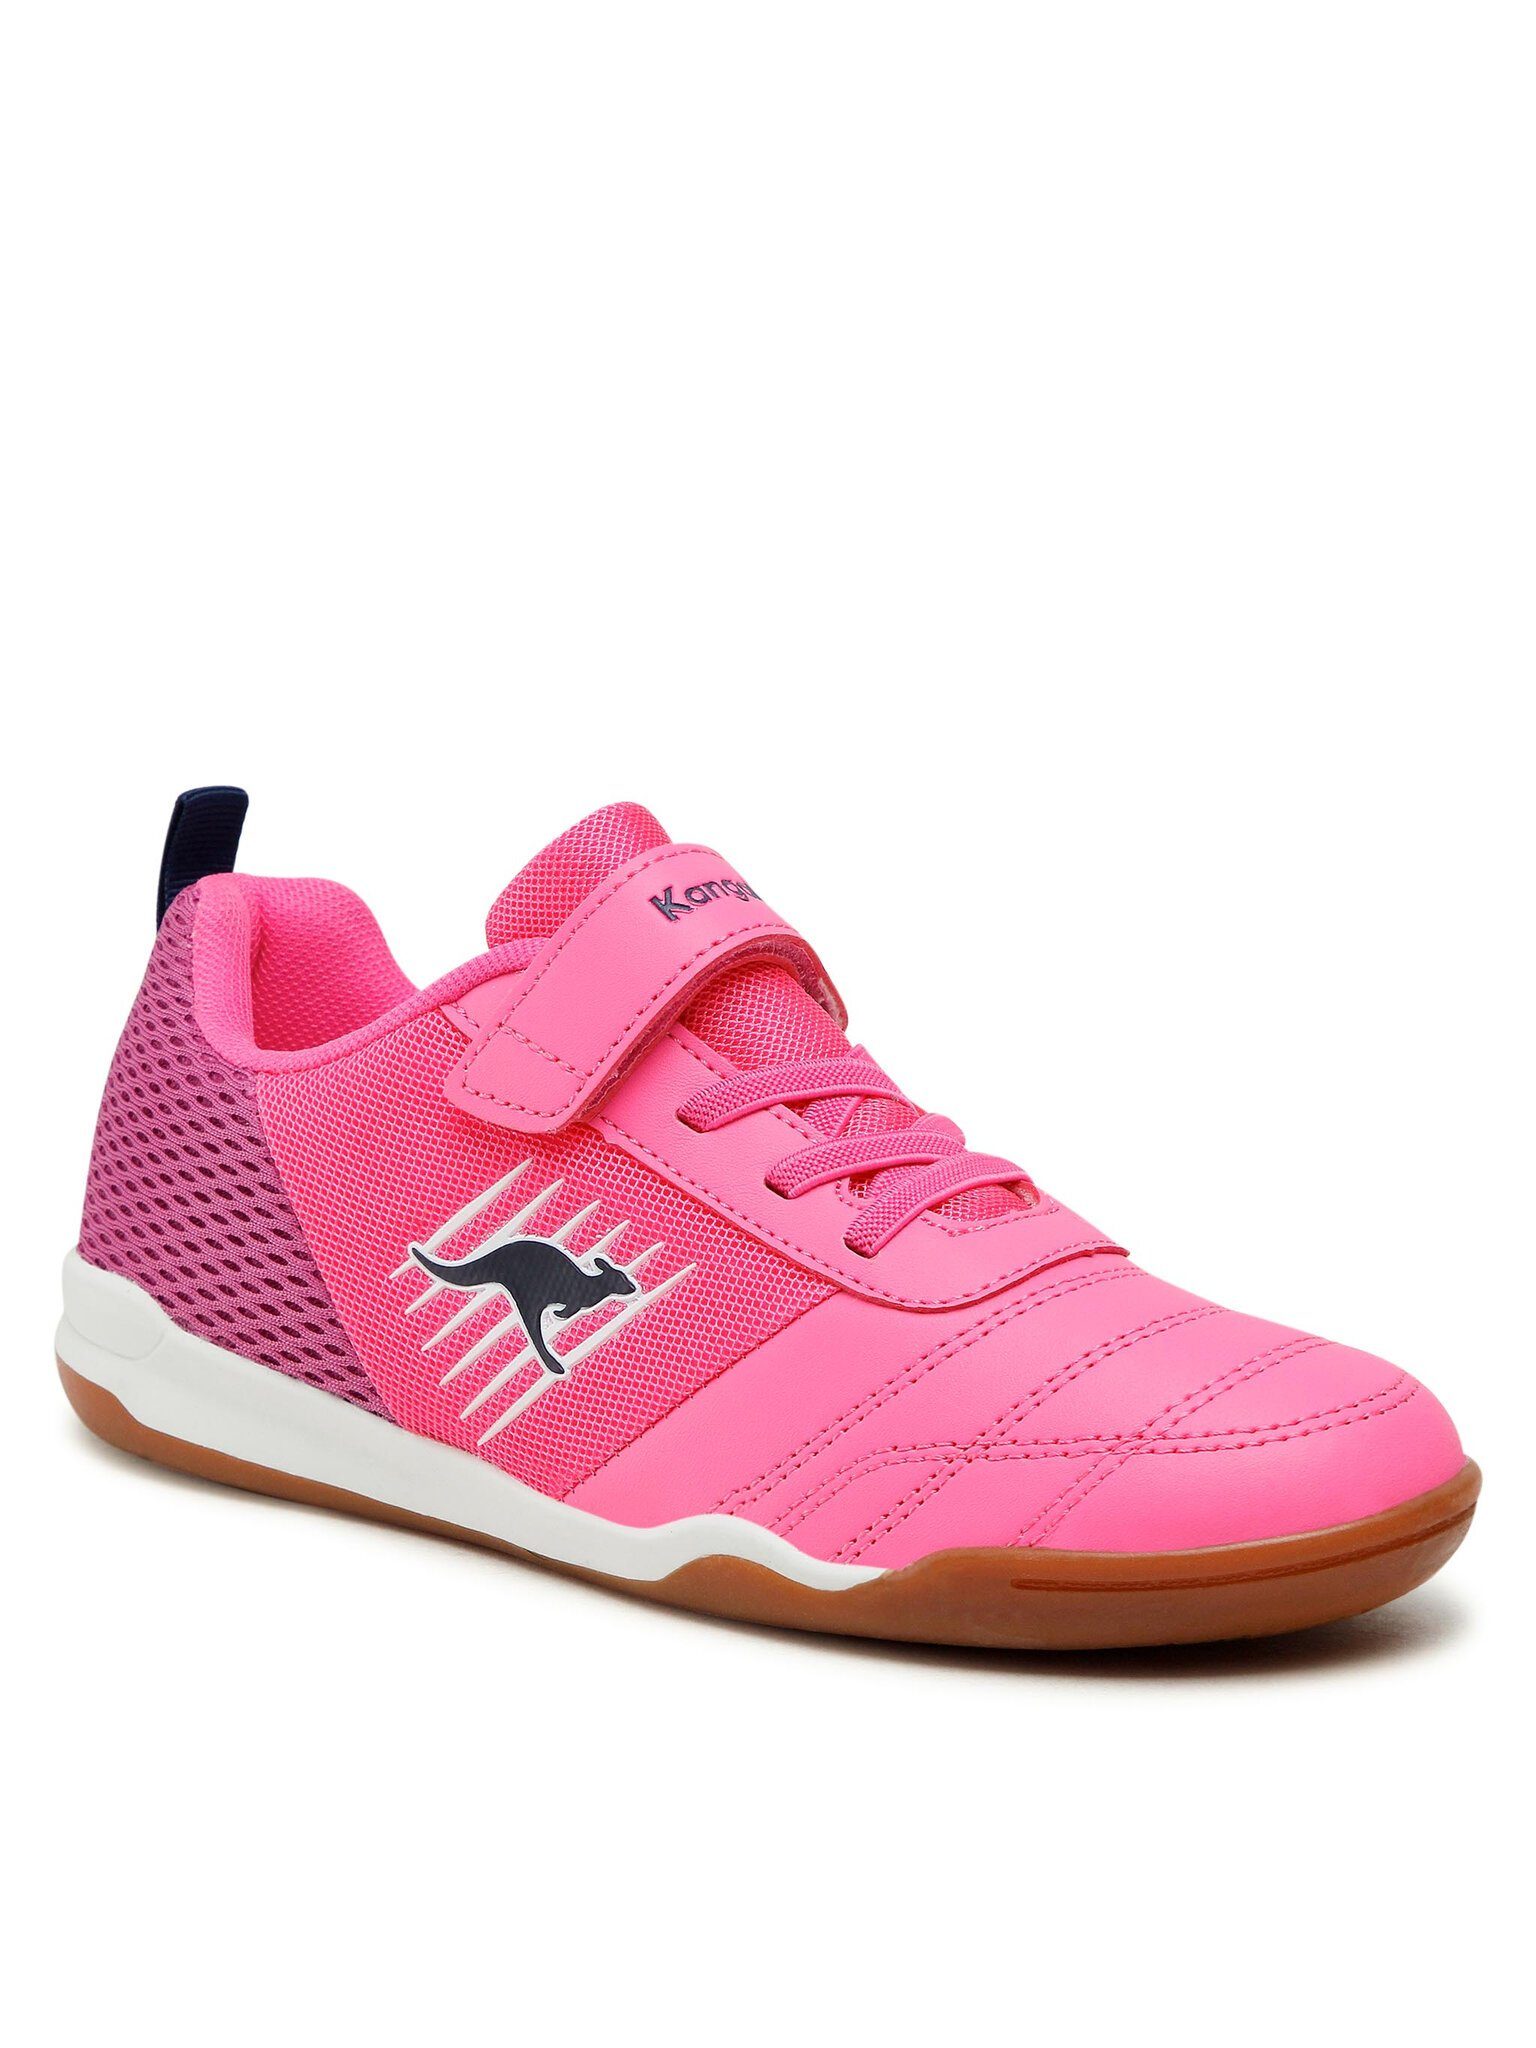 KangaROOS Schuhe Super Court Ev 18611 000 6211 D Neon Pink/Fuchsia Sneaker